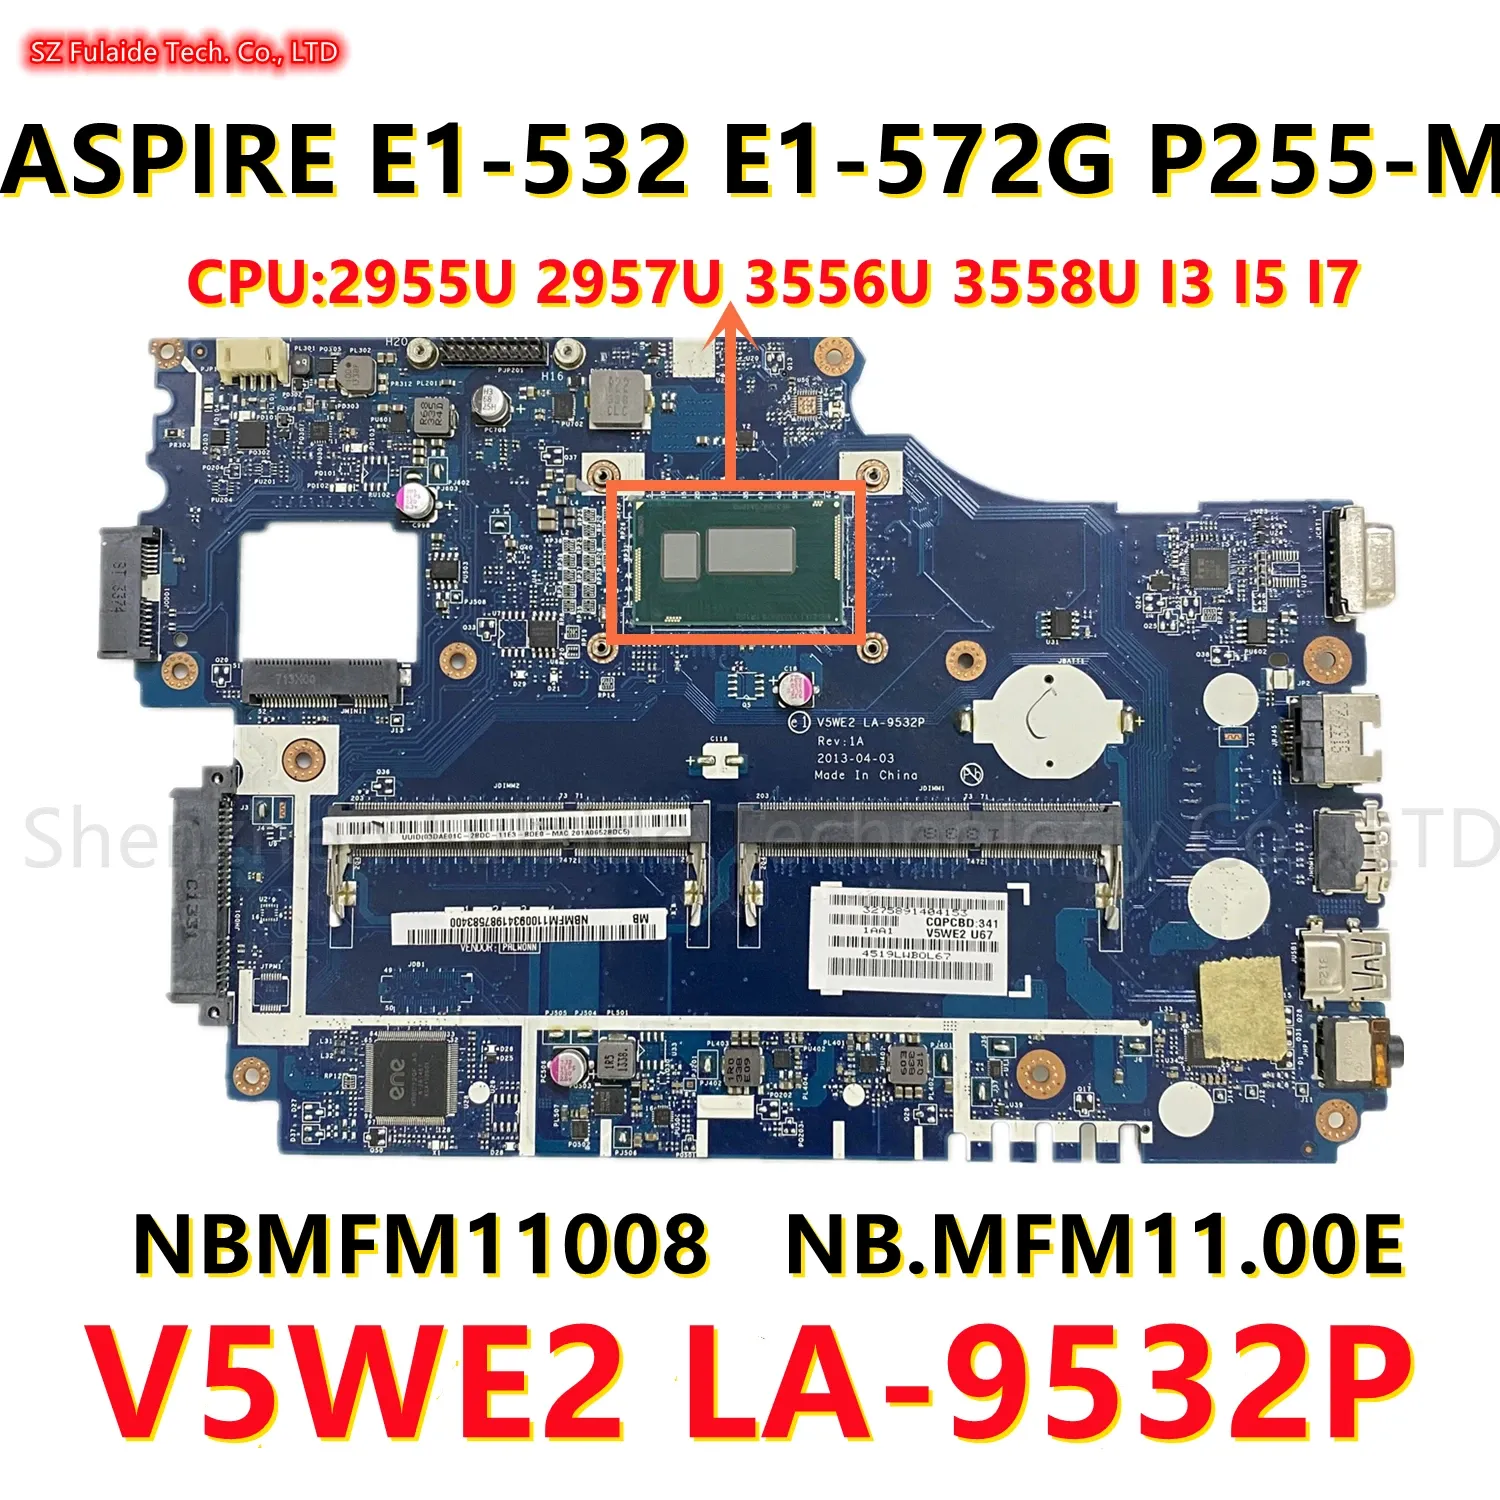 Motherboard NBMFM11008 For Acer Aspire E1532 E1572G P255M Laptop Motherboard With 2955U 2957U 3556U 3558U I3 I5 I7 CPU V5WE2 LA9532P